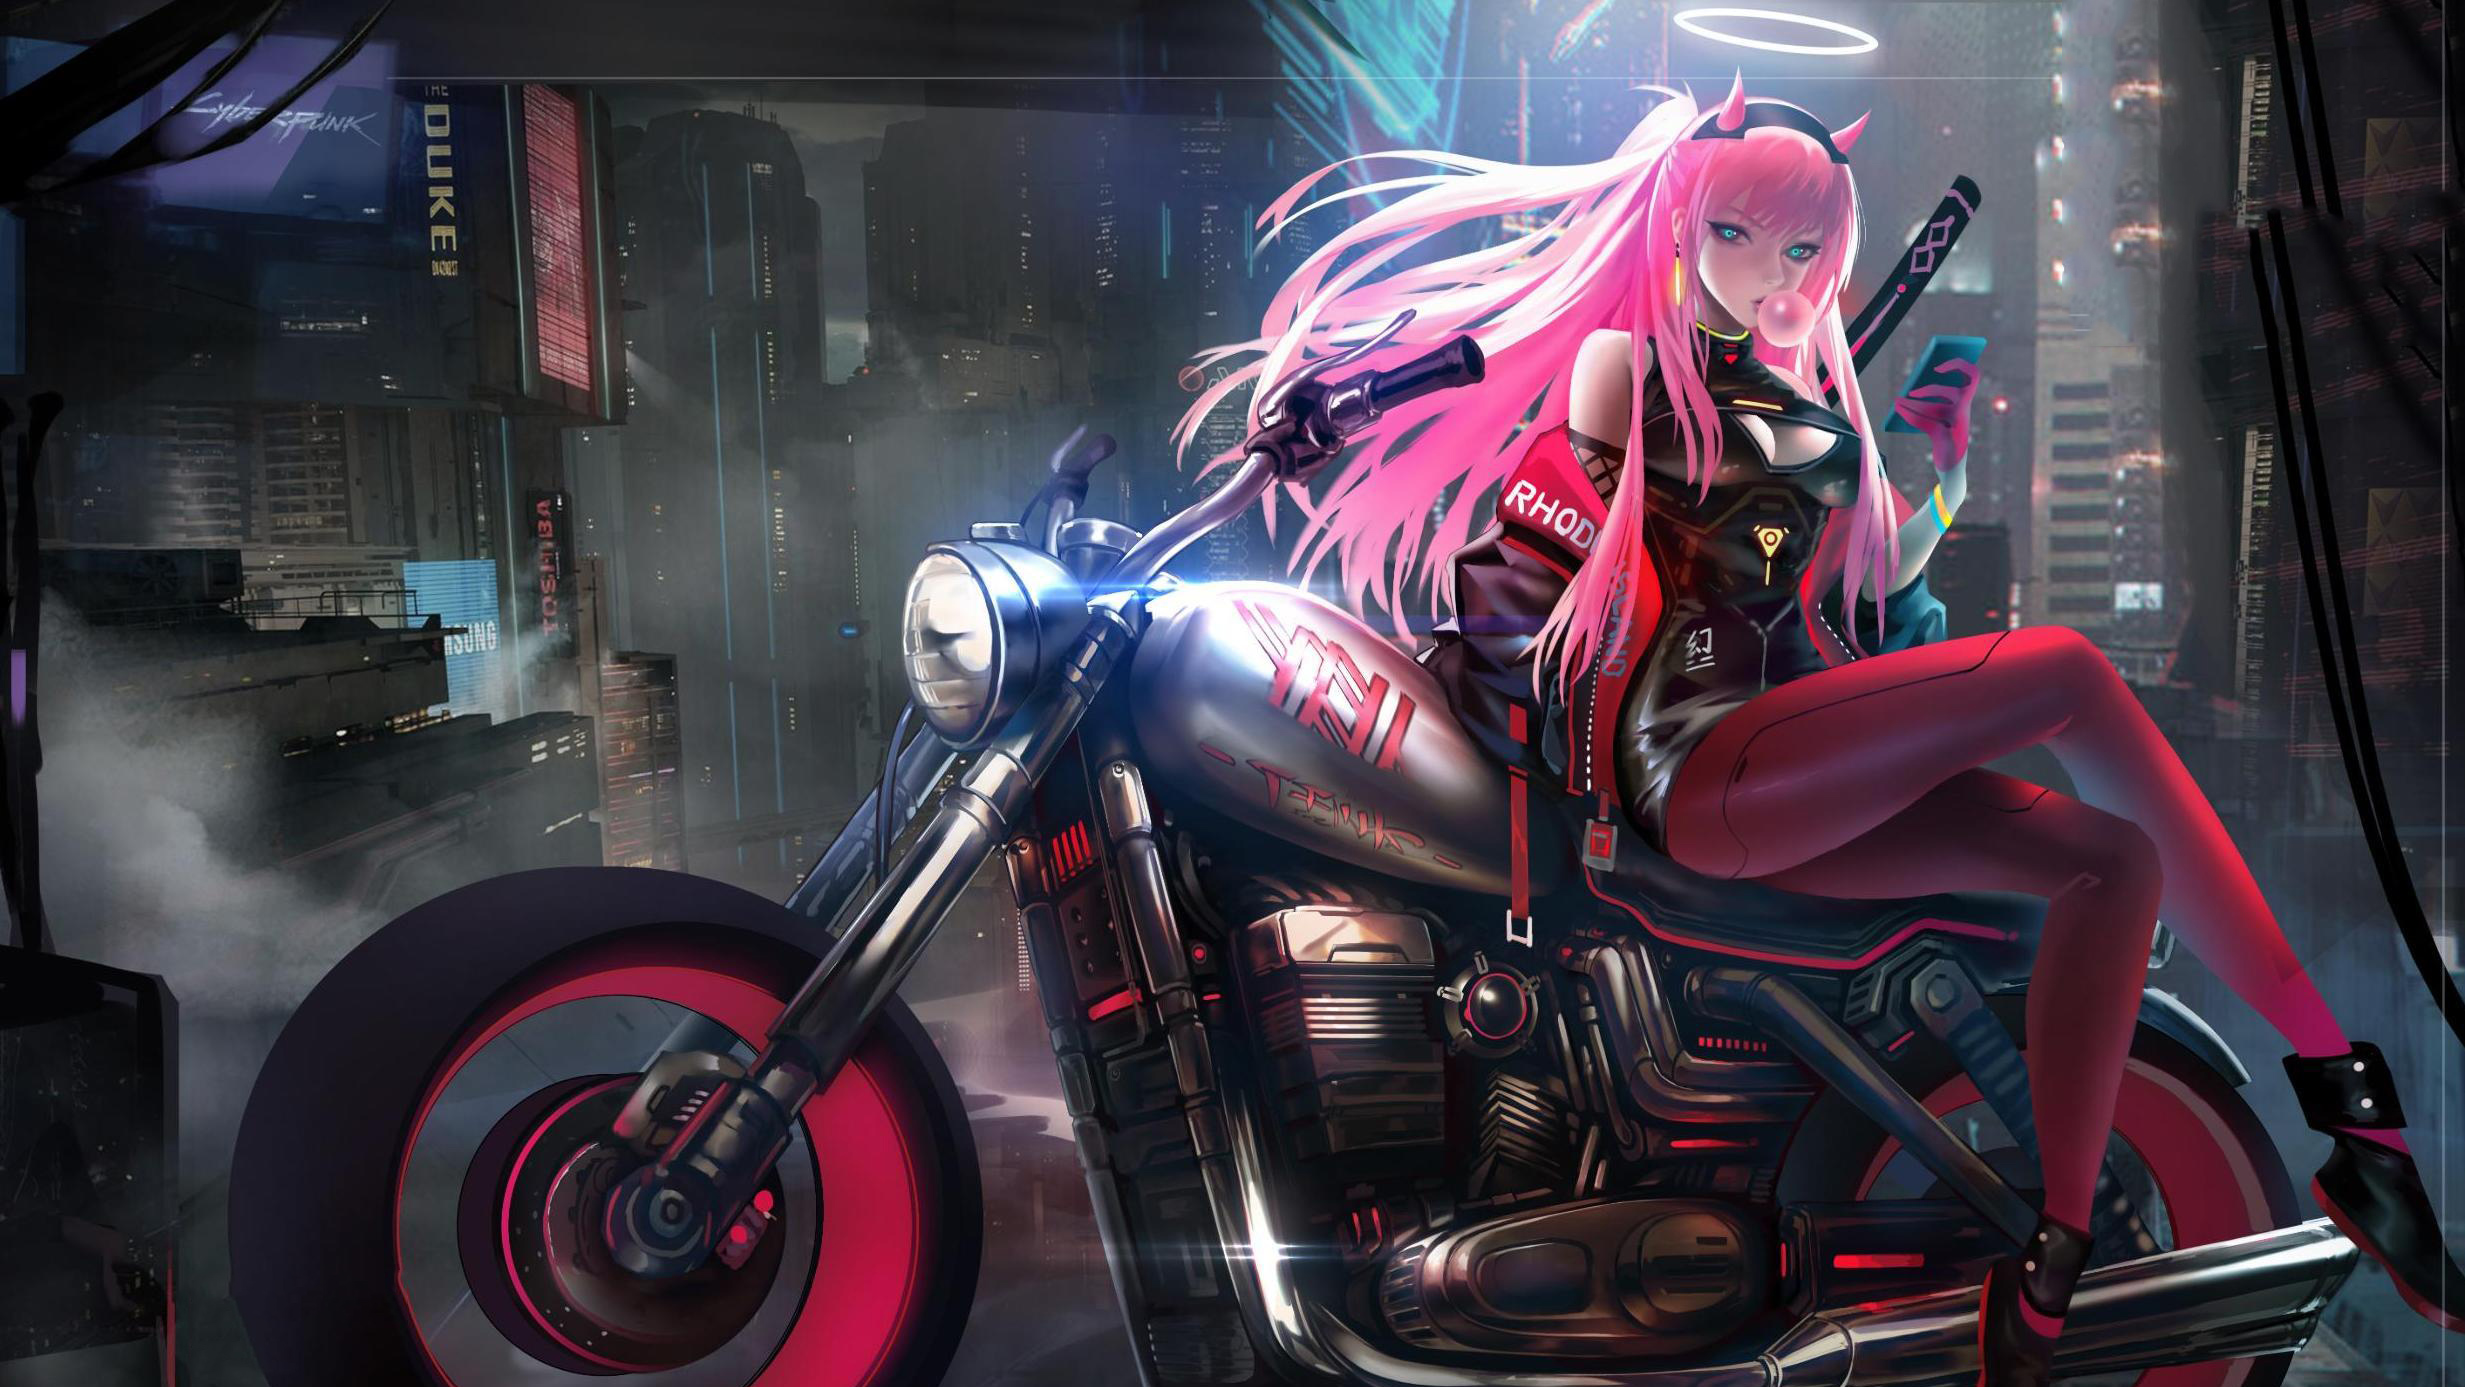 Anime Girl Motorcycle Wallpaper gambar ke 2